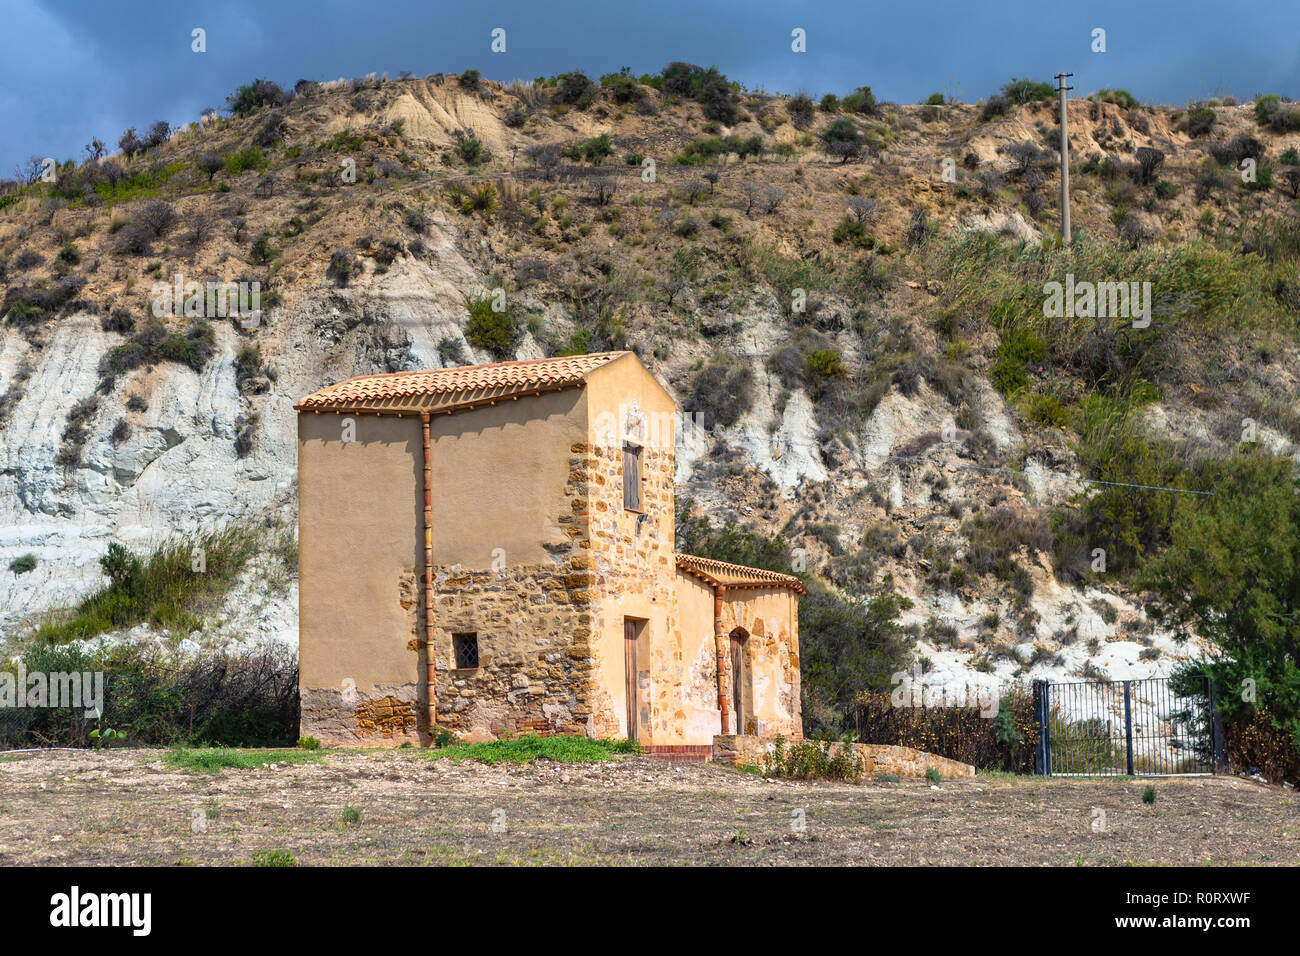 Old traditional sicilian house near Agrigento, Sicily, Italy. Stock Photo